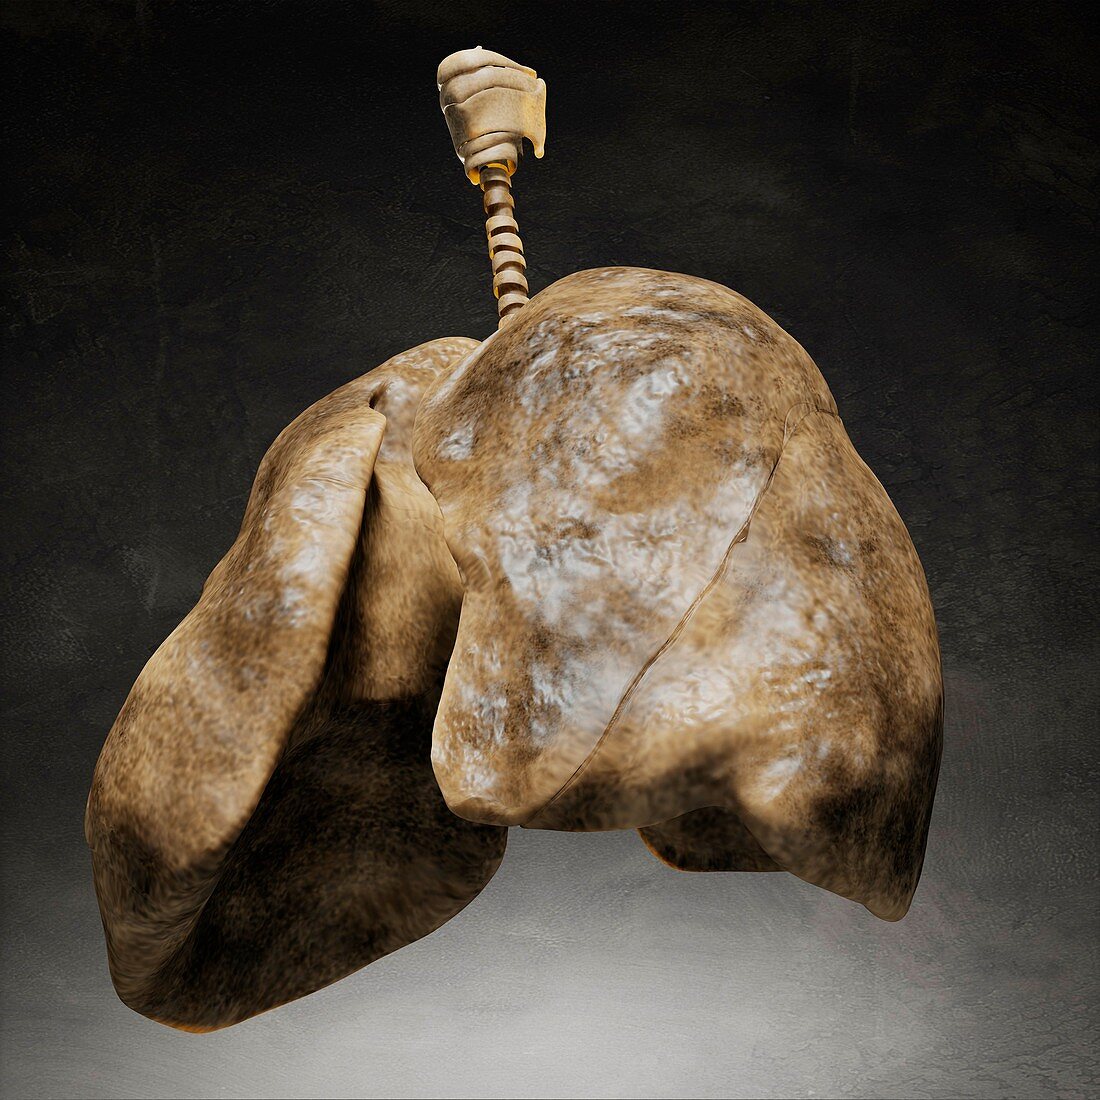 Smoker's lungs,artwork